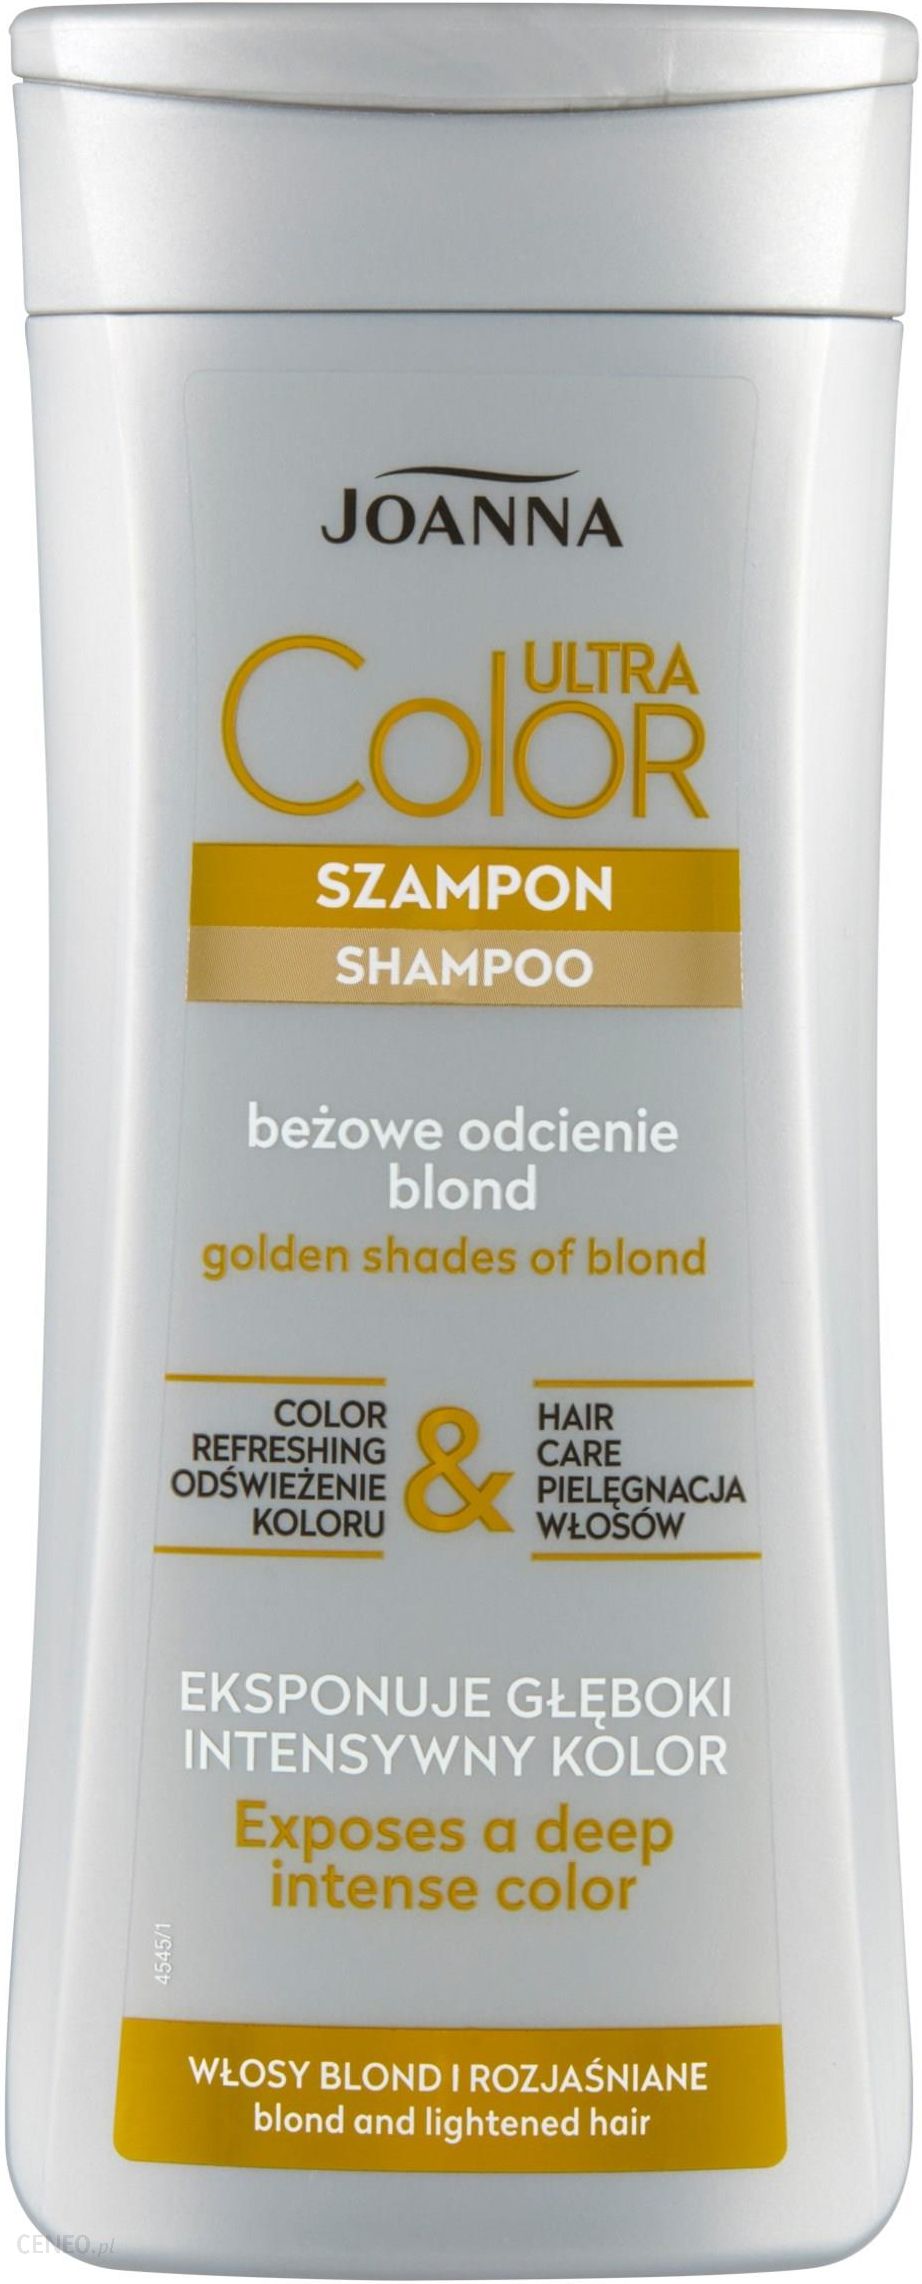 szampon joanna ochladzajacy blond